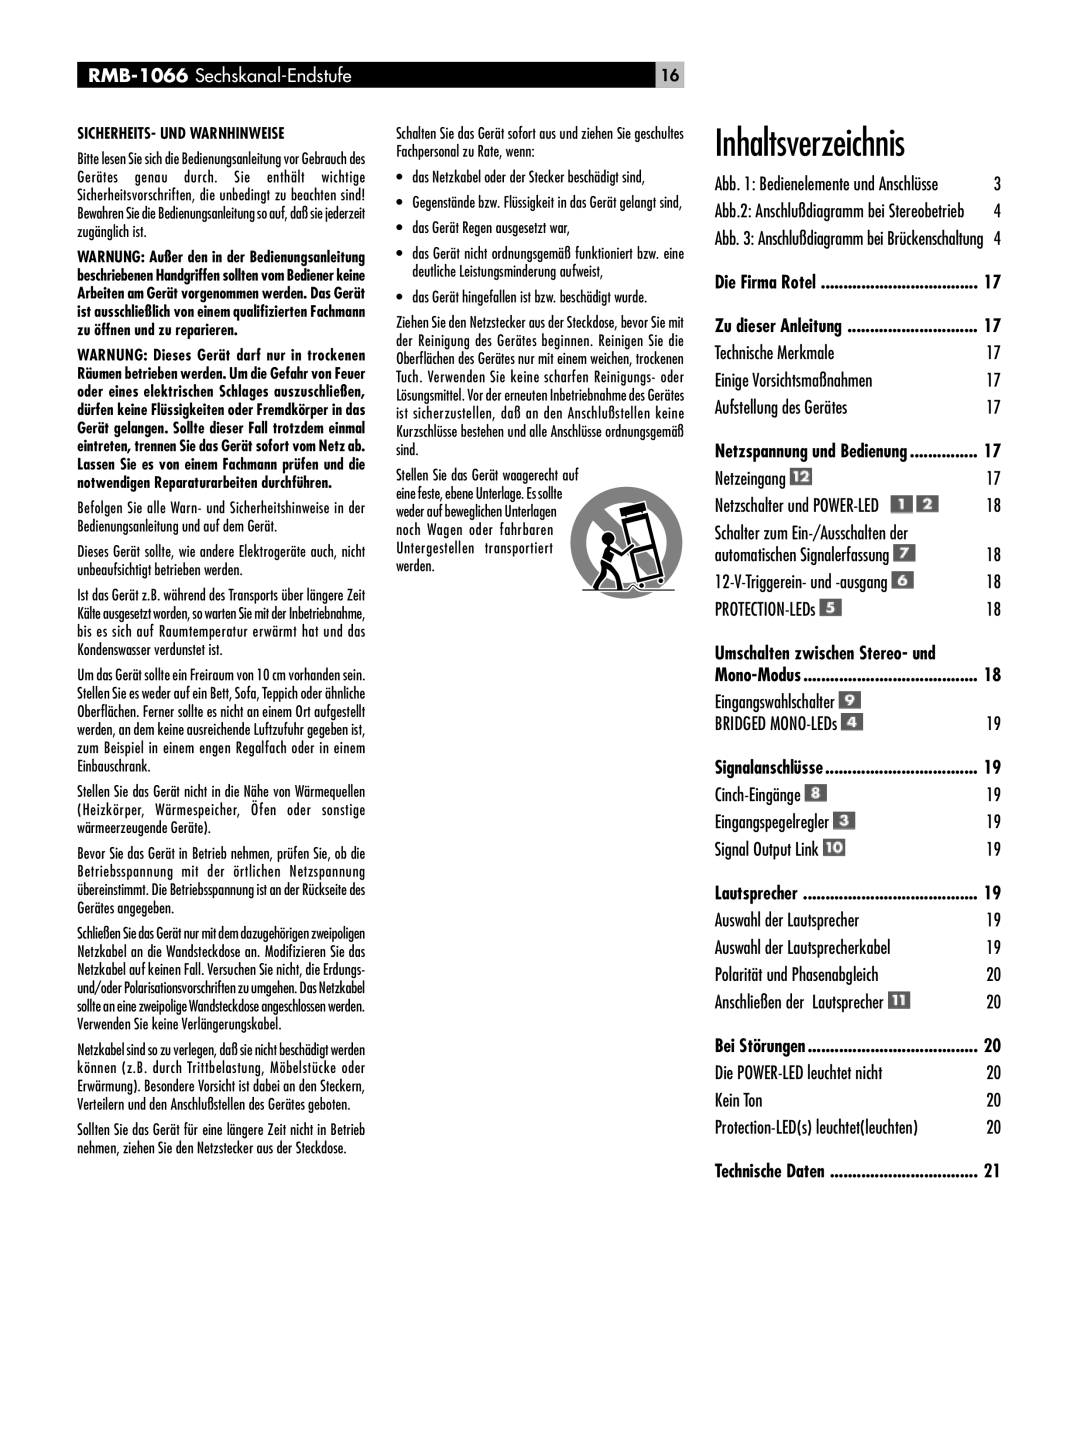 Rotel RB-1066 owner manual Inhaltsverzeichnis, RMB-1066 Sechskanal-Endstufe 